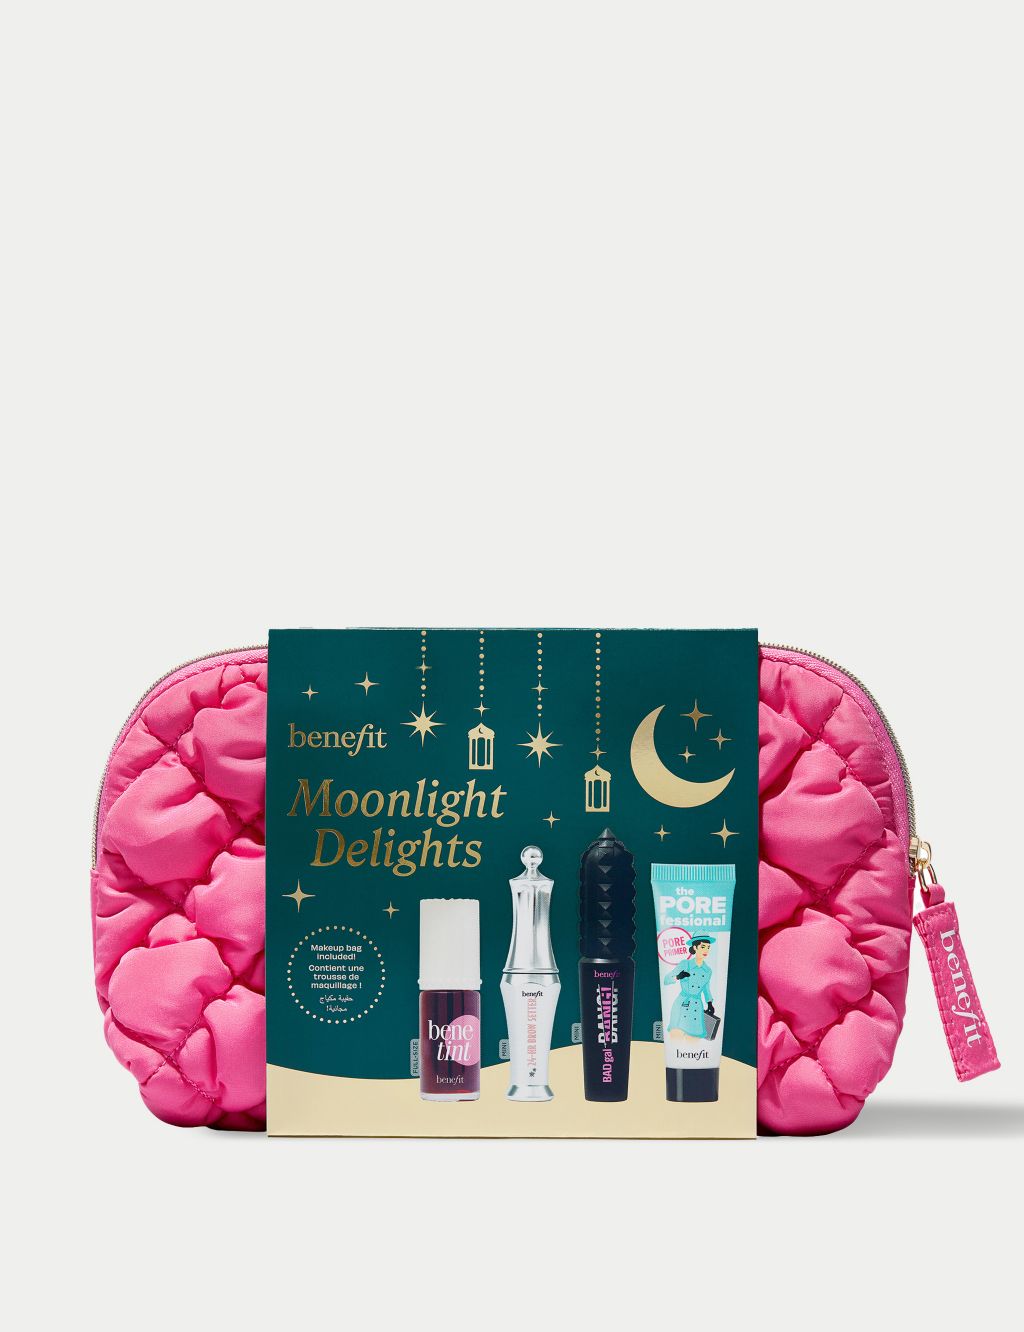 Moonlight Delights Benetint, 24hr Brow Setter, BadGal Bang and Porefessional Gift Set worth £67 21ml